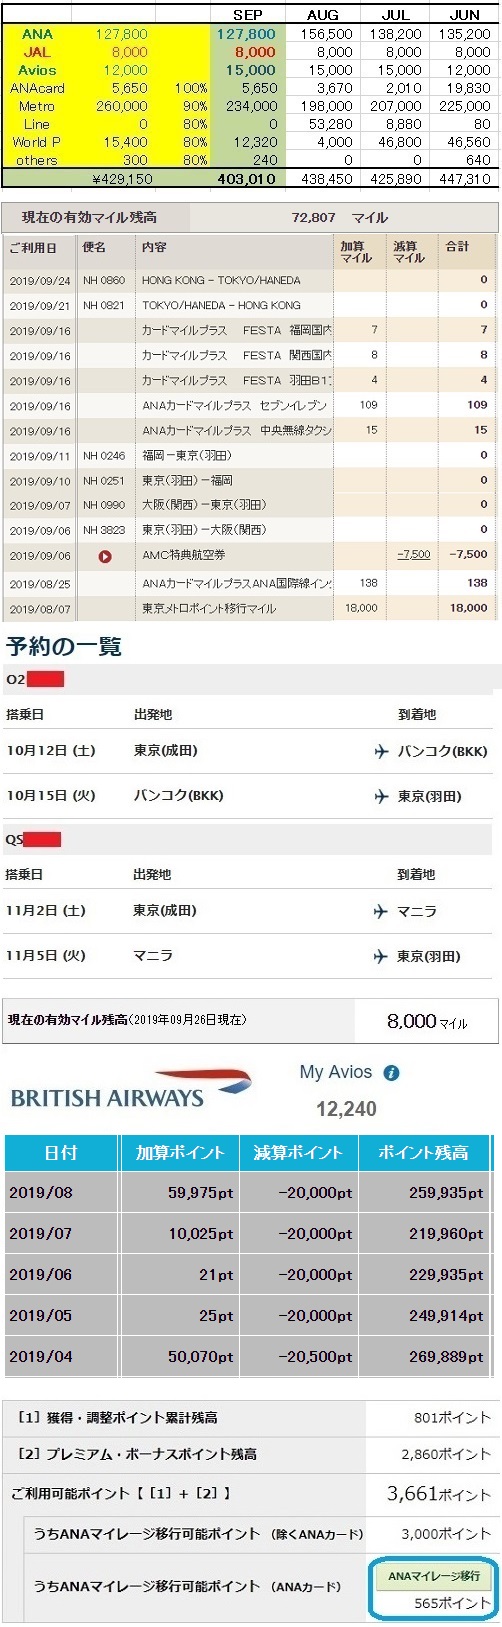 【ANAマイル】 累計獲得555.300M→427,500M搭乗